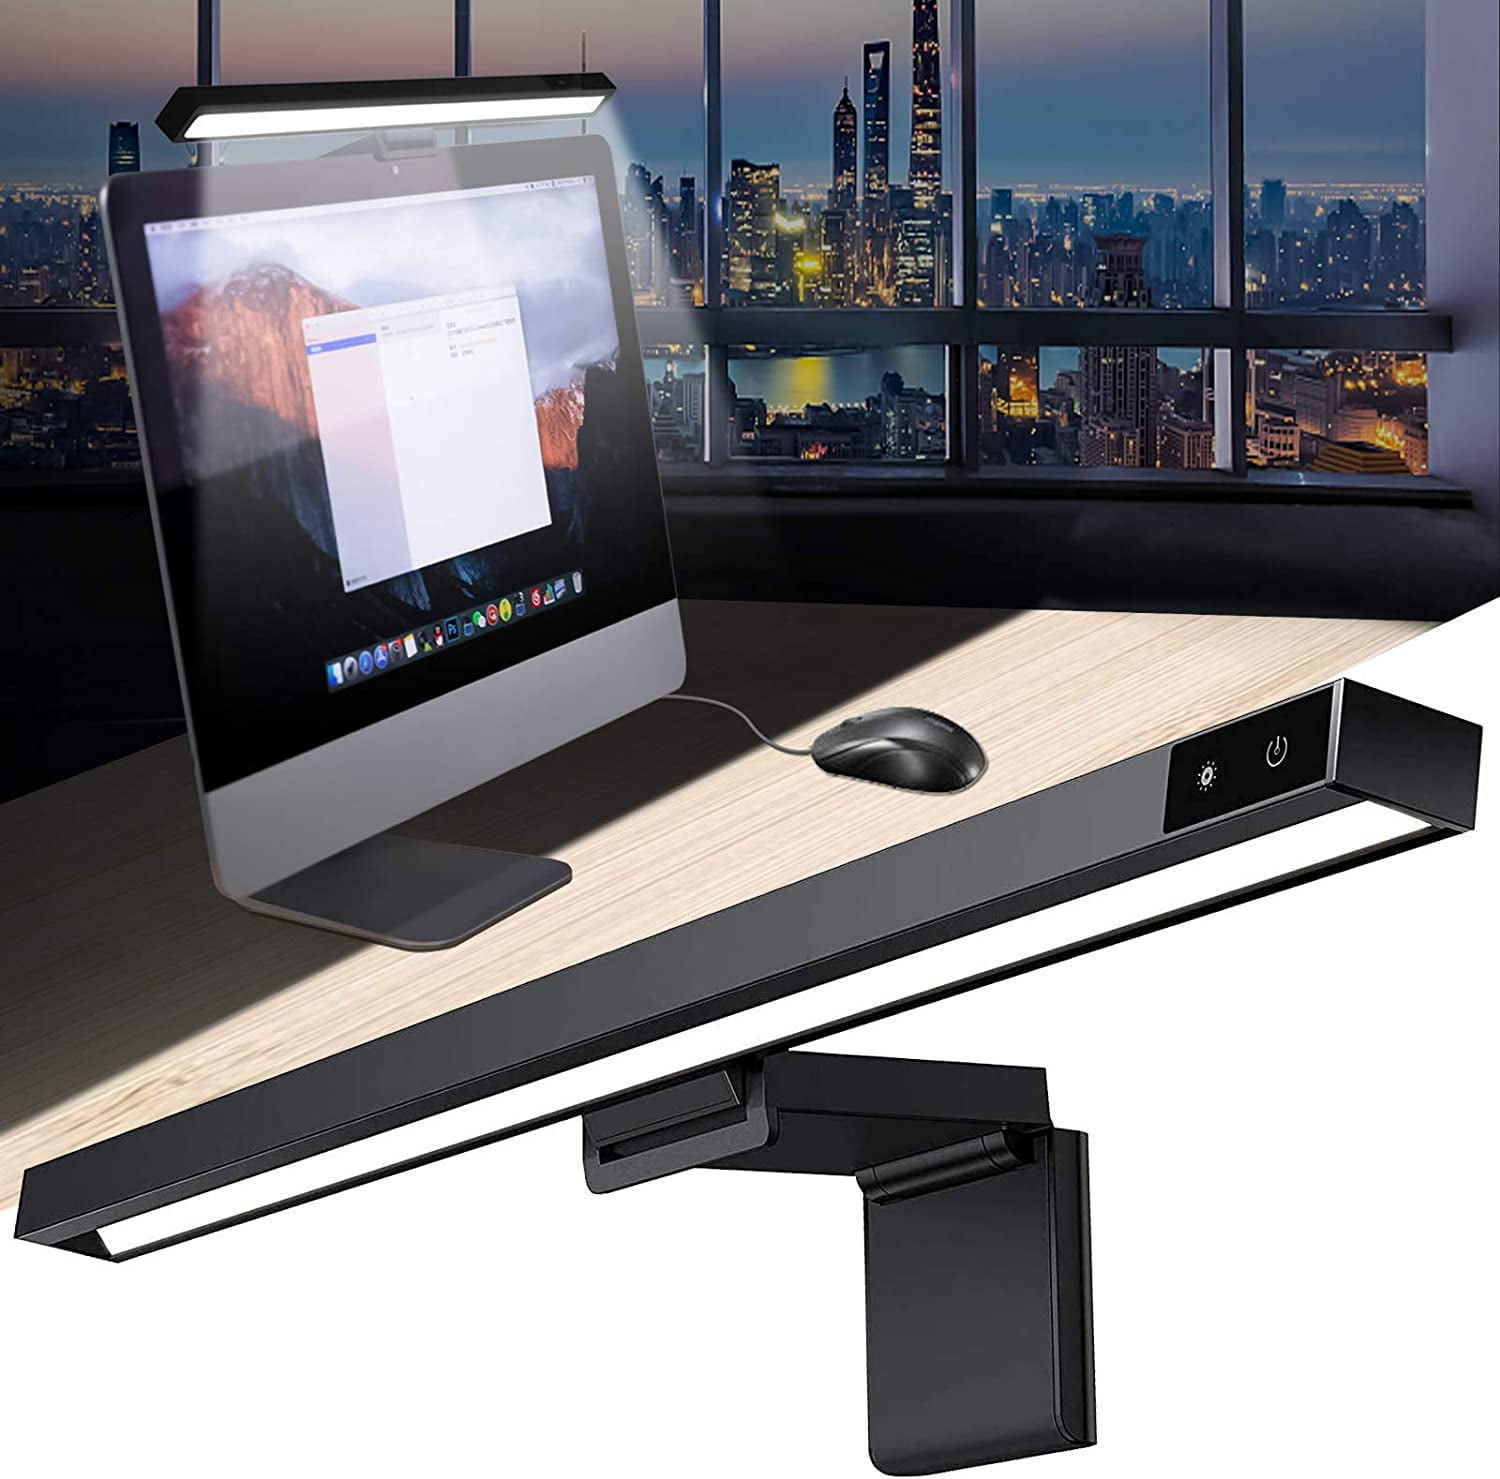 Newest Arrival Fashionable Mini Flexible 10 LED USB Portable Lamp Light for Laptop Notebook Desktop PC Convenient for Reading 